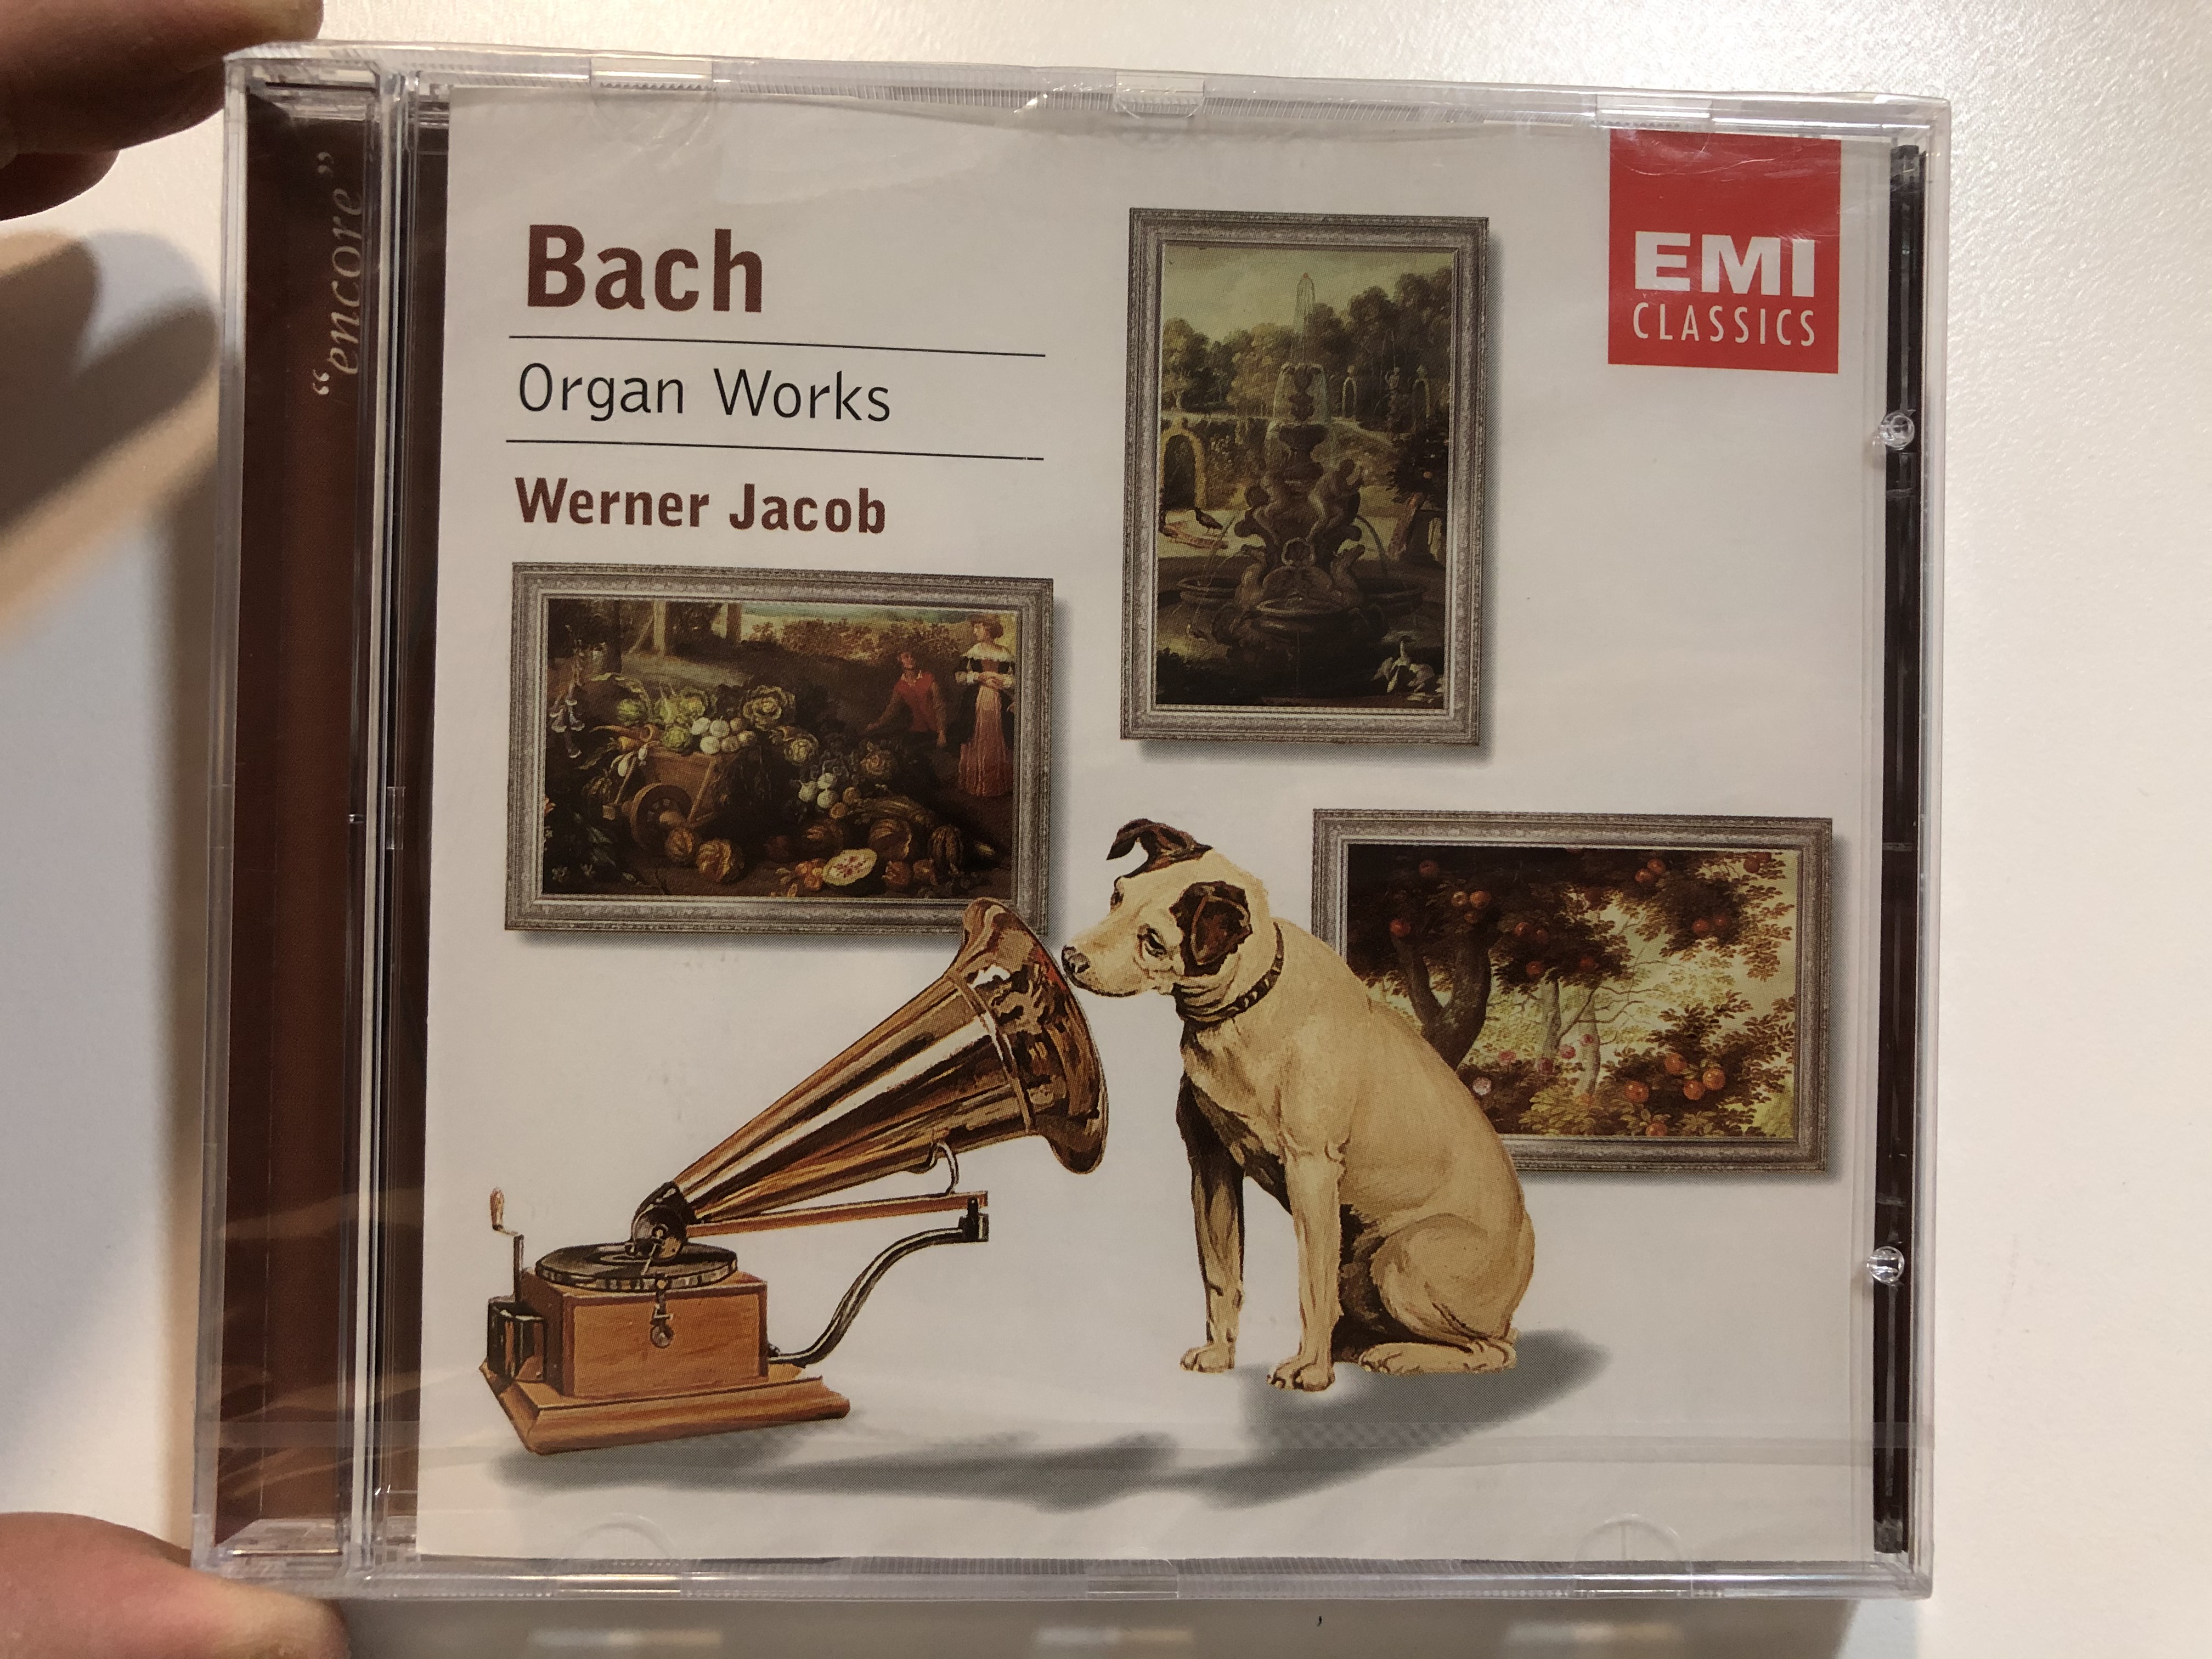 bach-organ-works-werner-jacob-emi-classics-audio-cd-2002-724357521420-1-.jpg